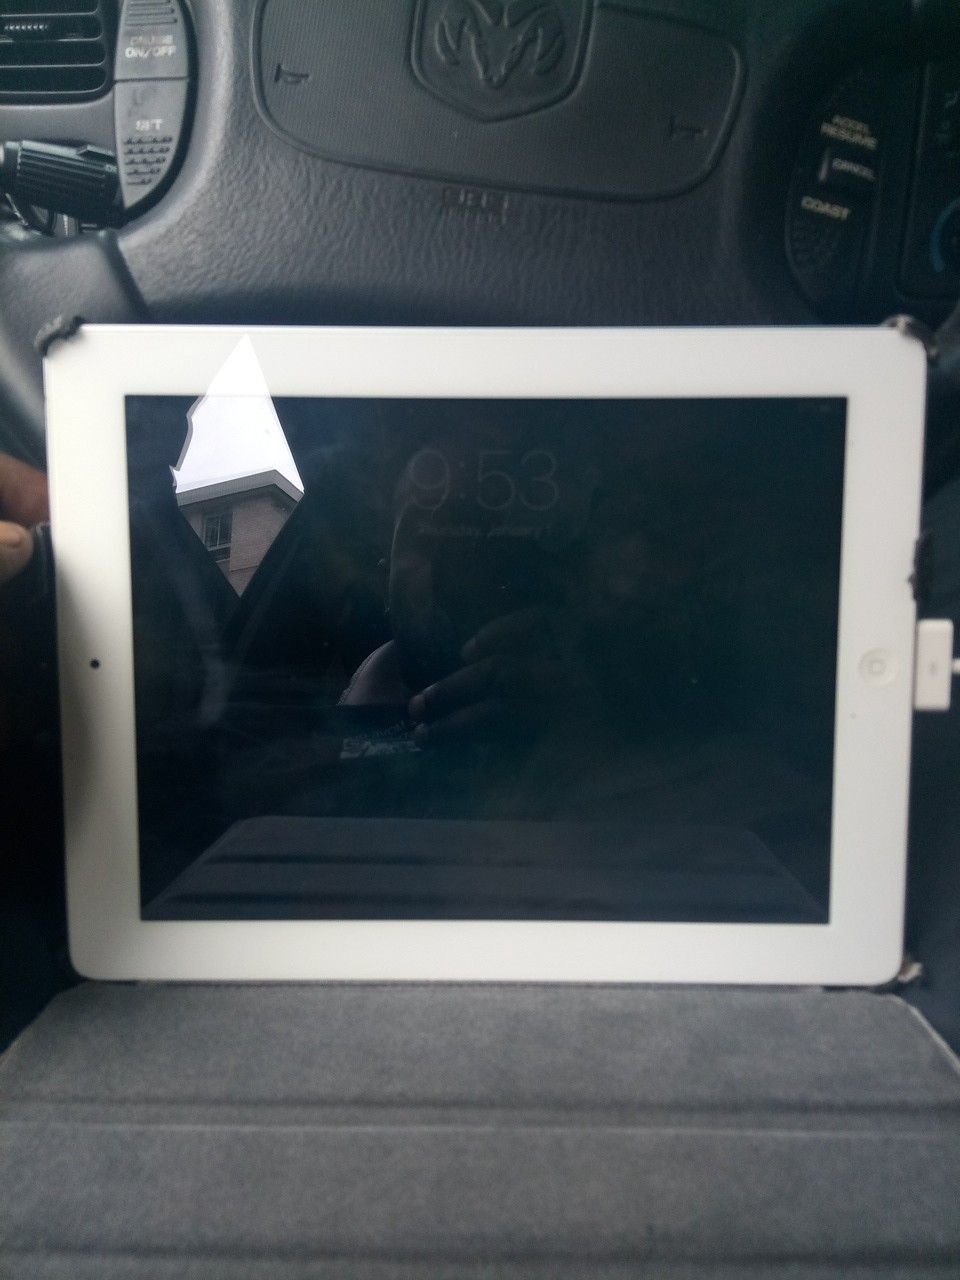 iPad 2 with phone and wifi